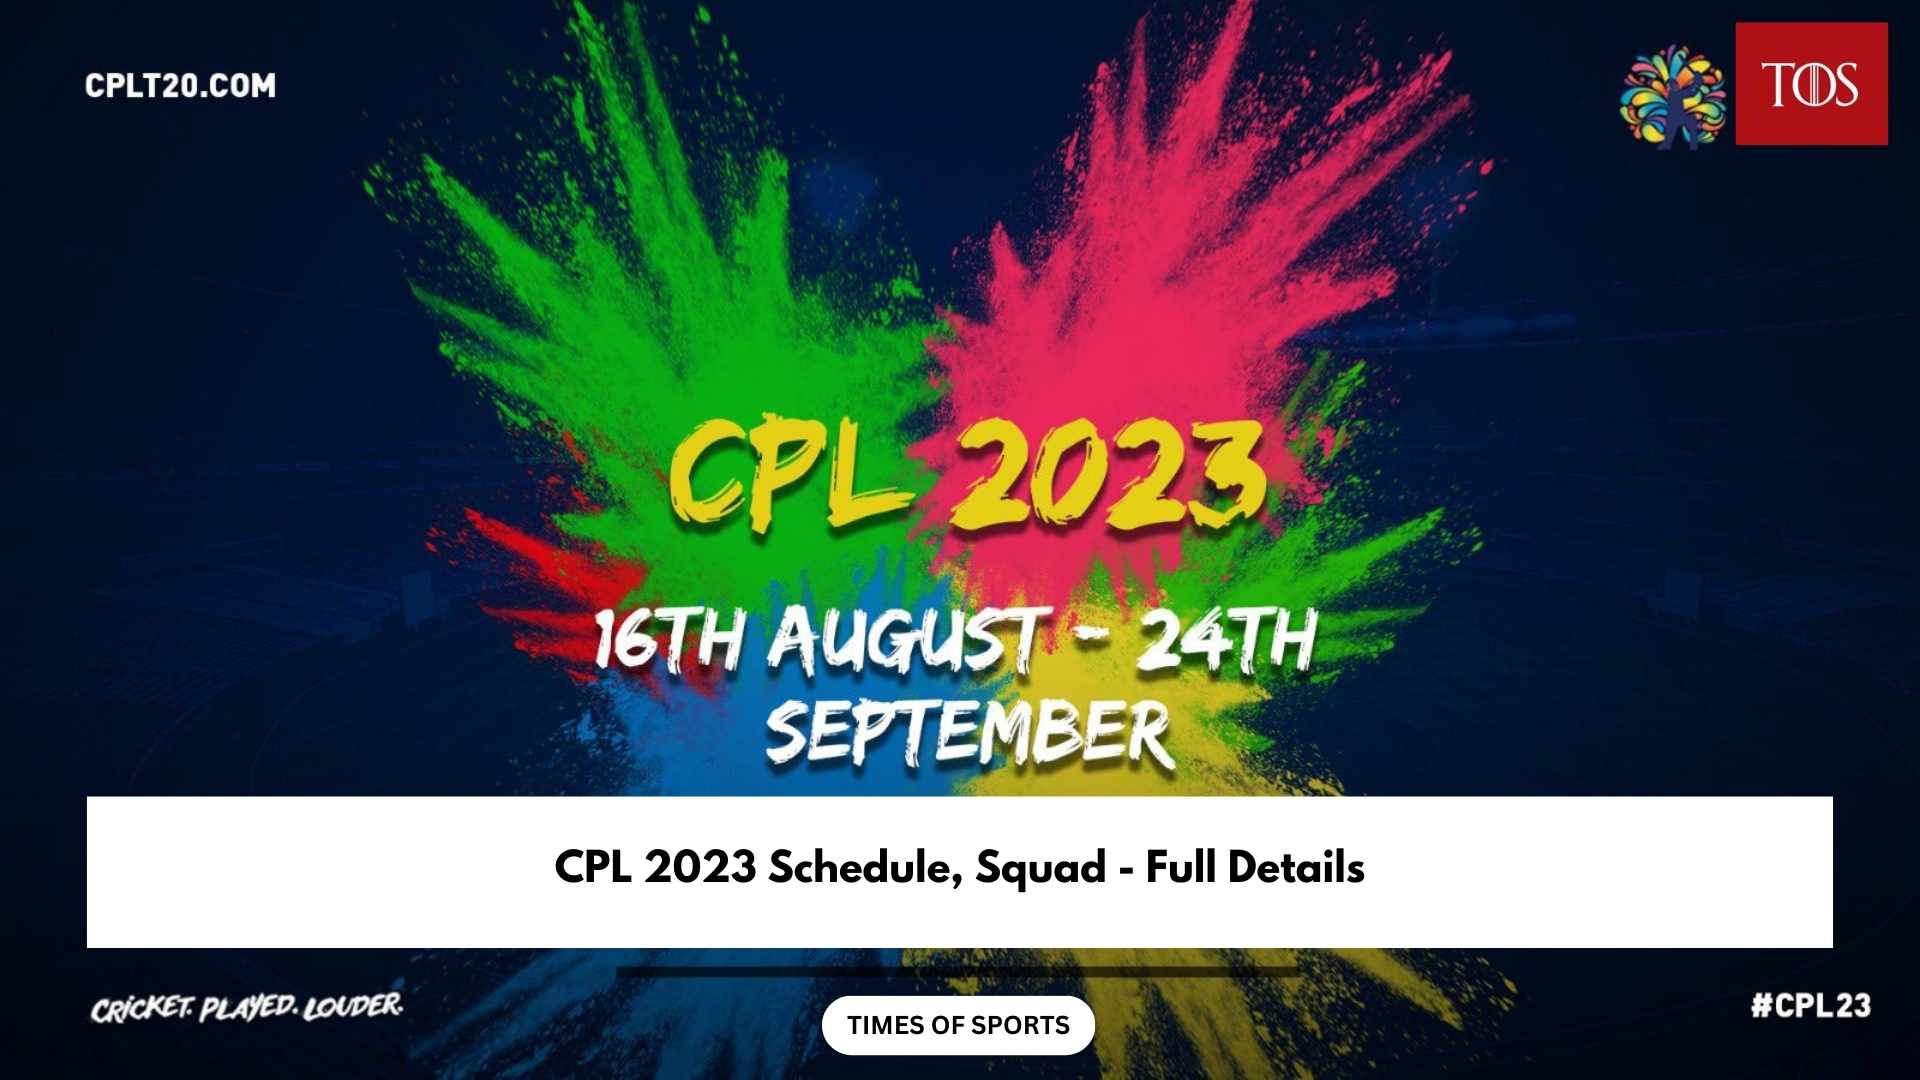 Fixtures confirmed for CPL 2023